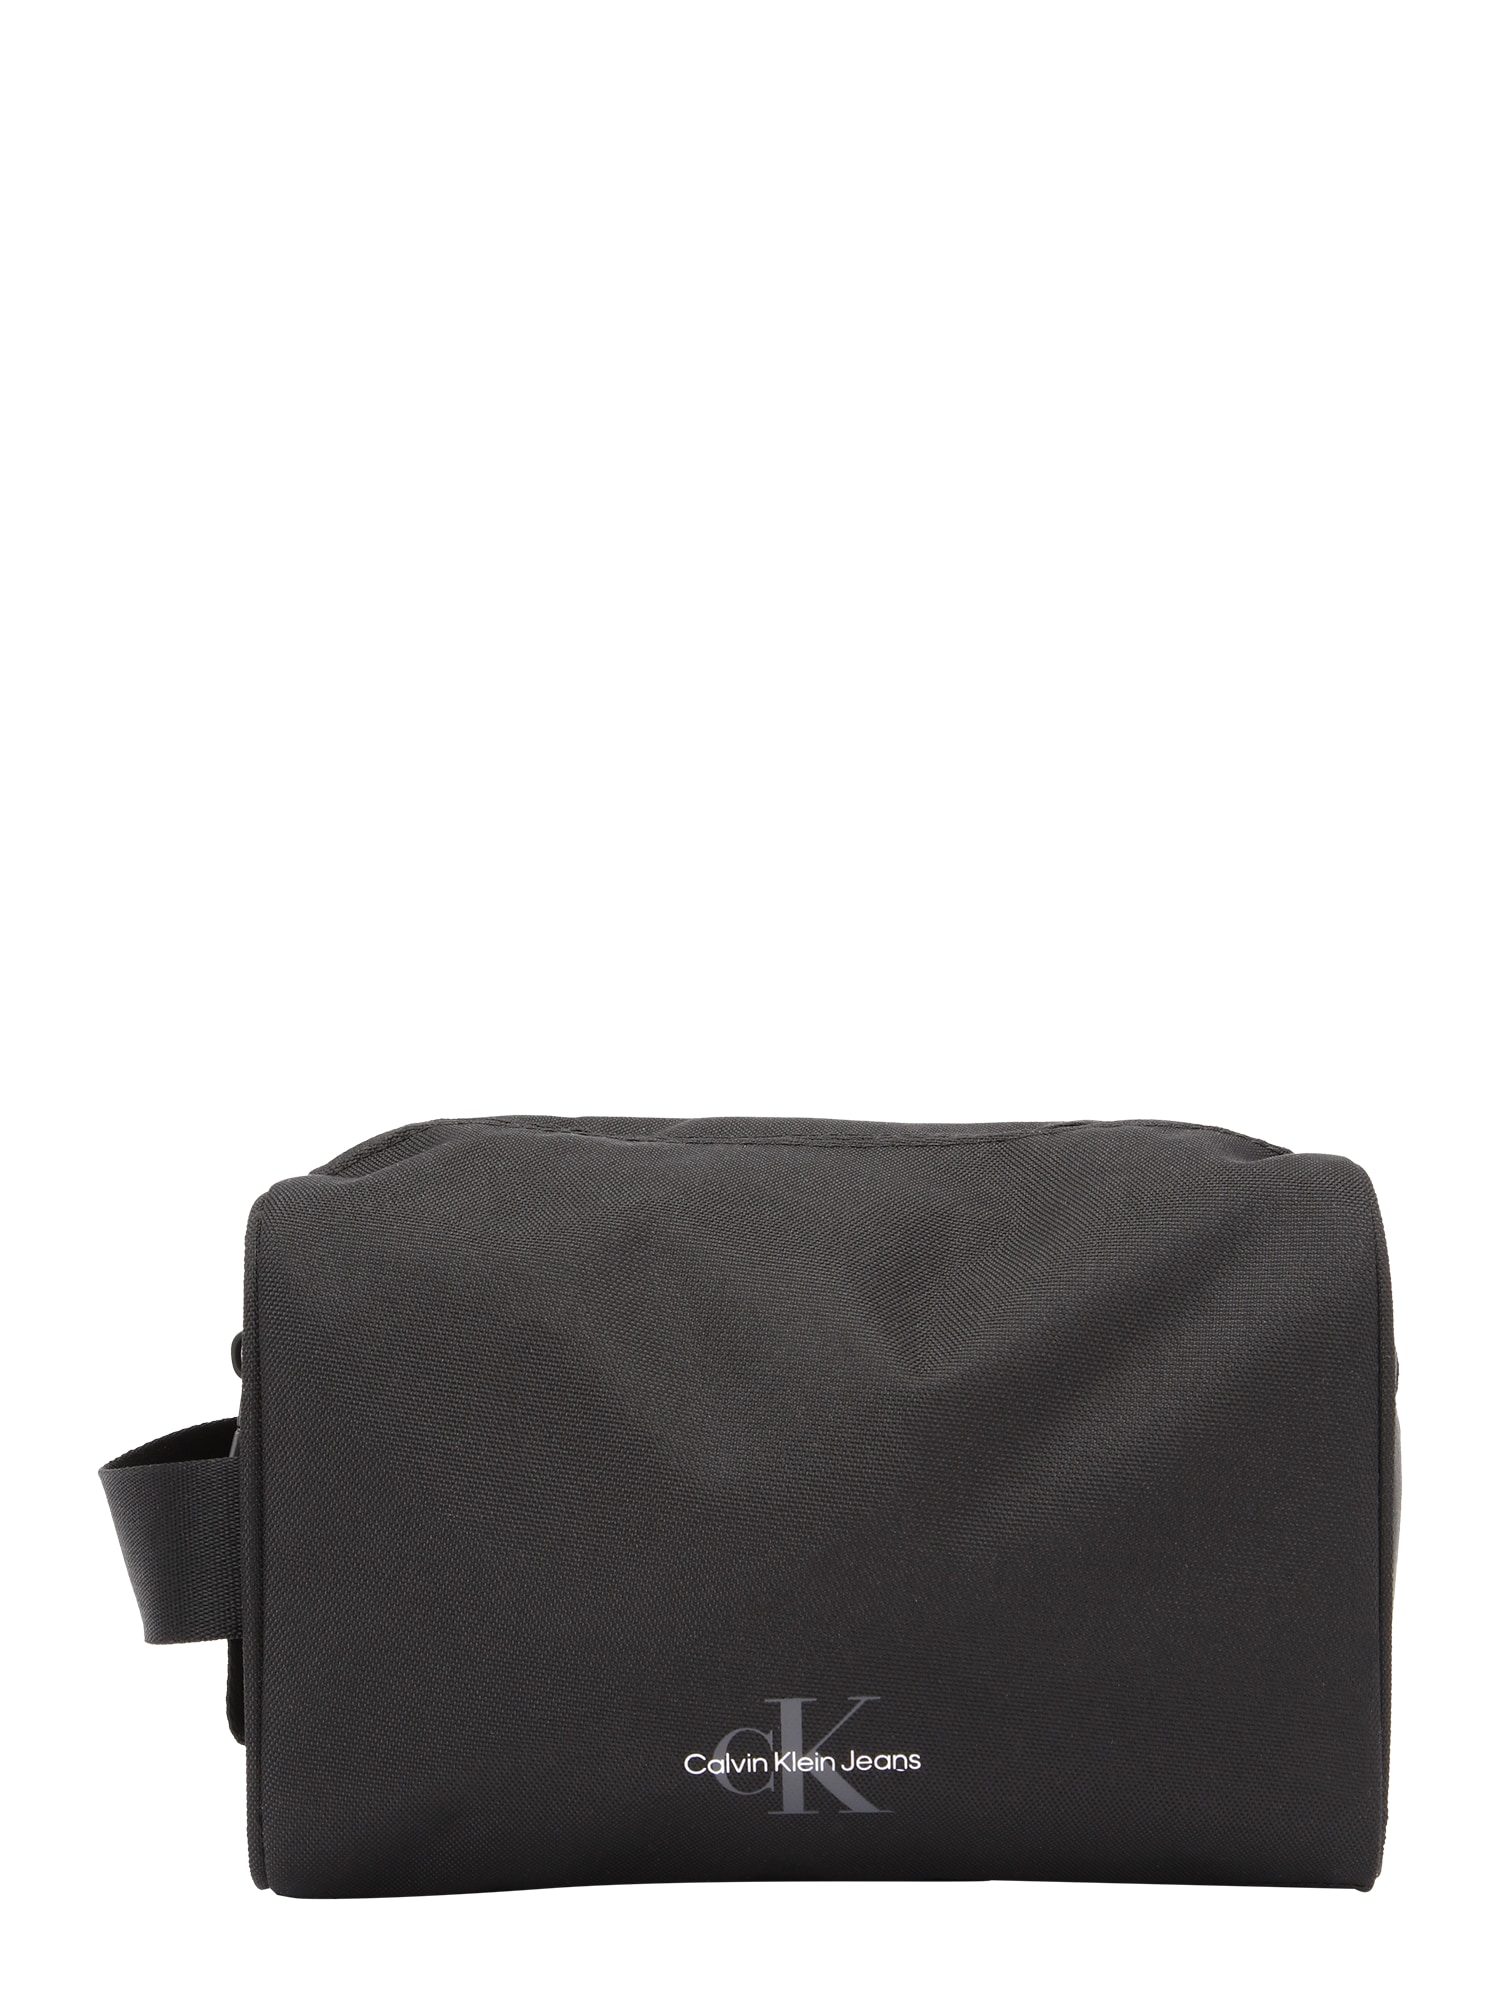 Calvin Klein Jeans Tuoleto reikmenų krepšys 'ESSENTIALS' tamsiai pilka / juoda / balkšva